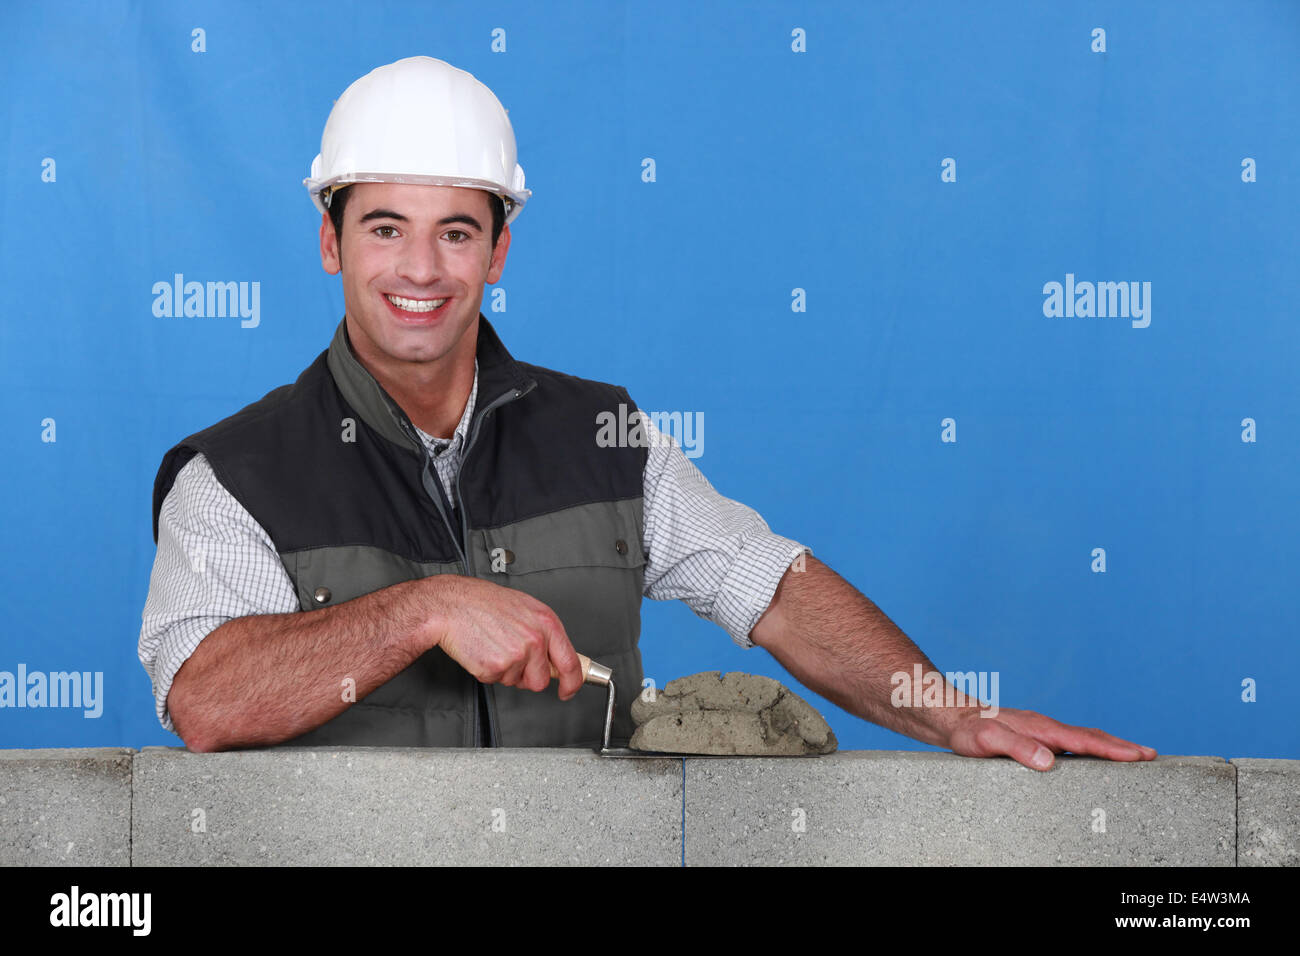 Man laying bricks Stock Photo